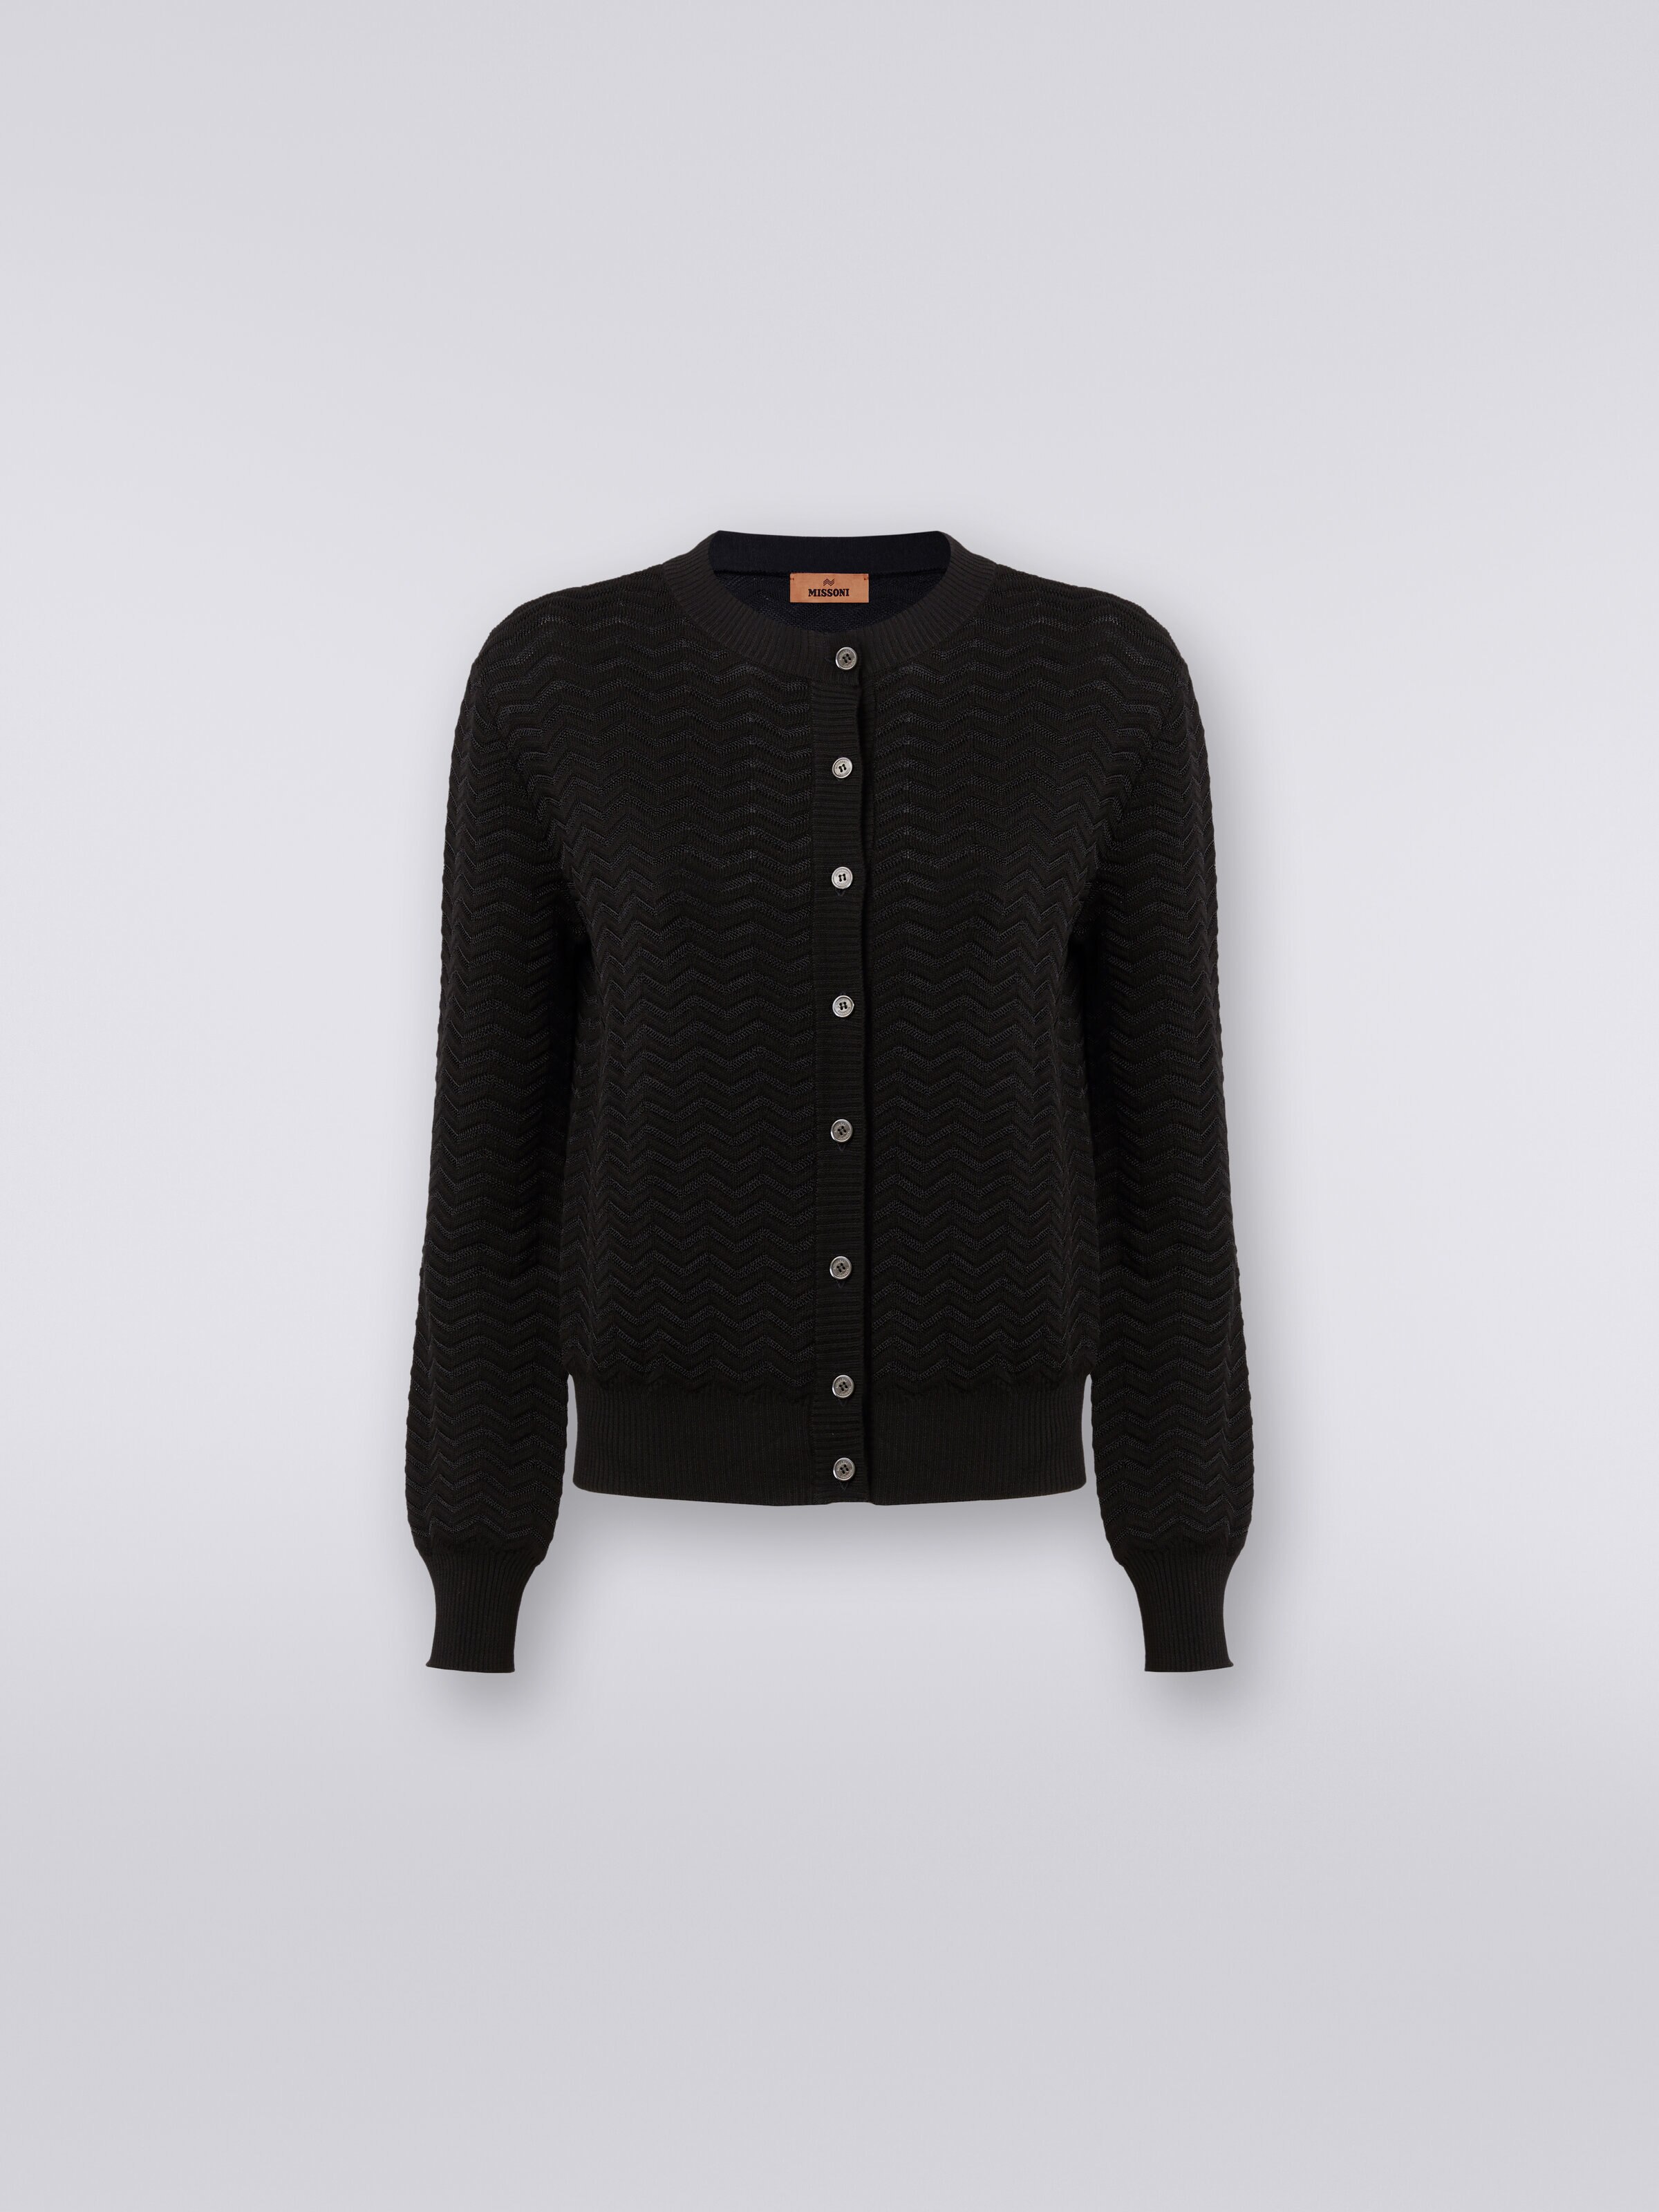 Cardigan in chevron cotton and viscose knit, Black    - 0